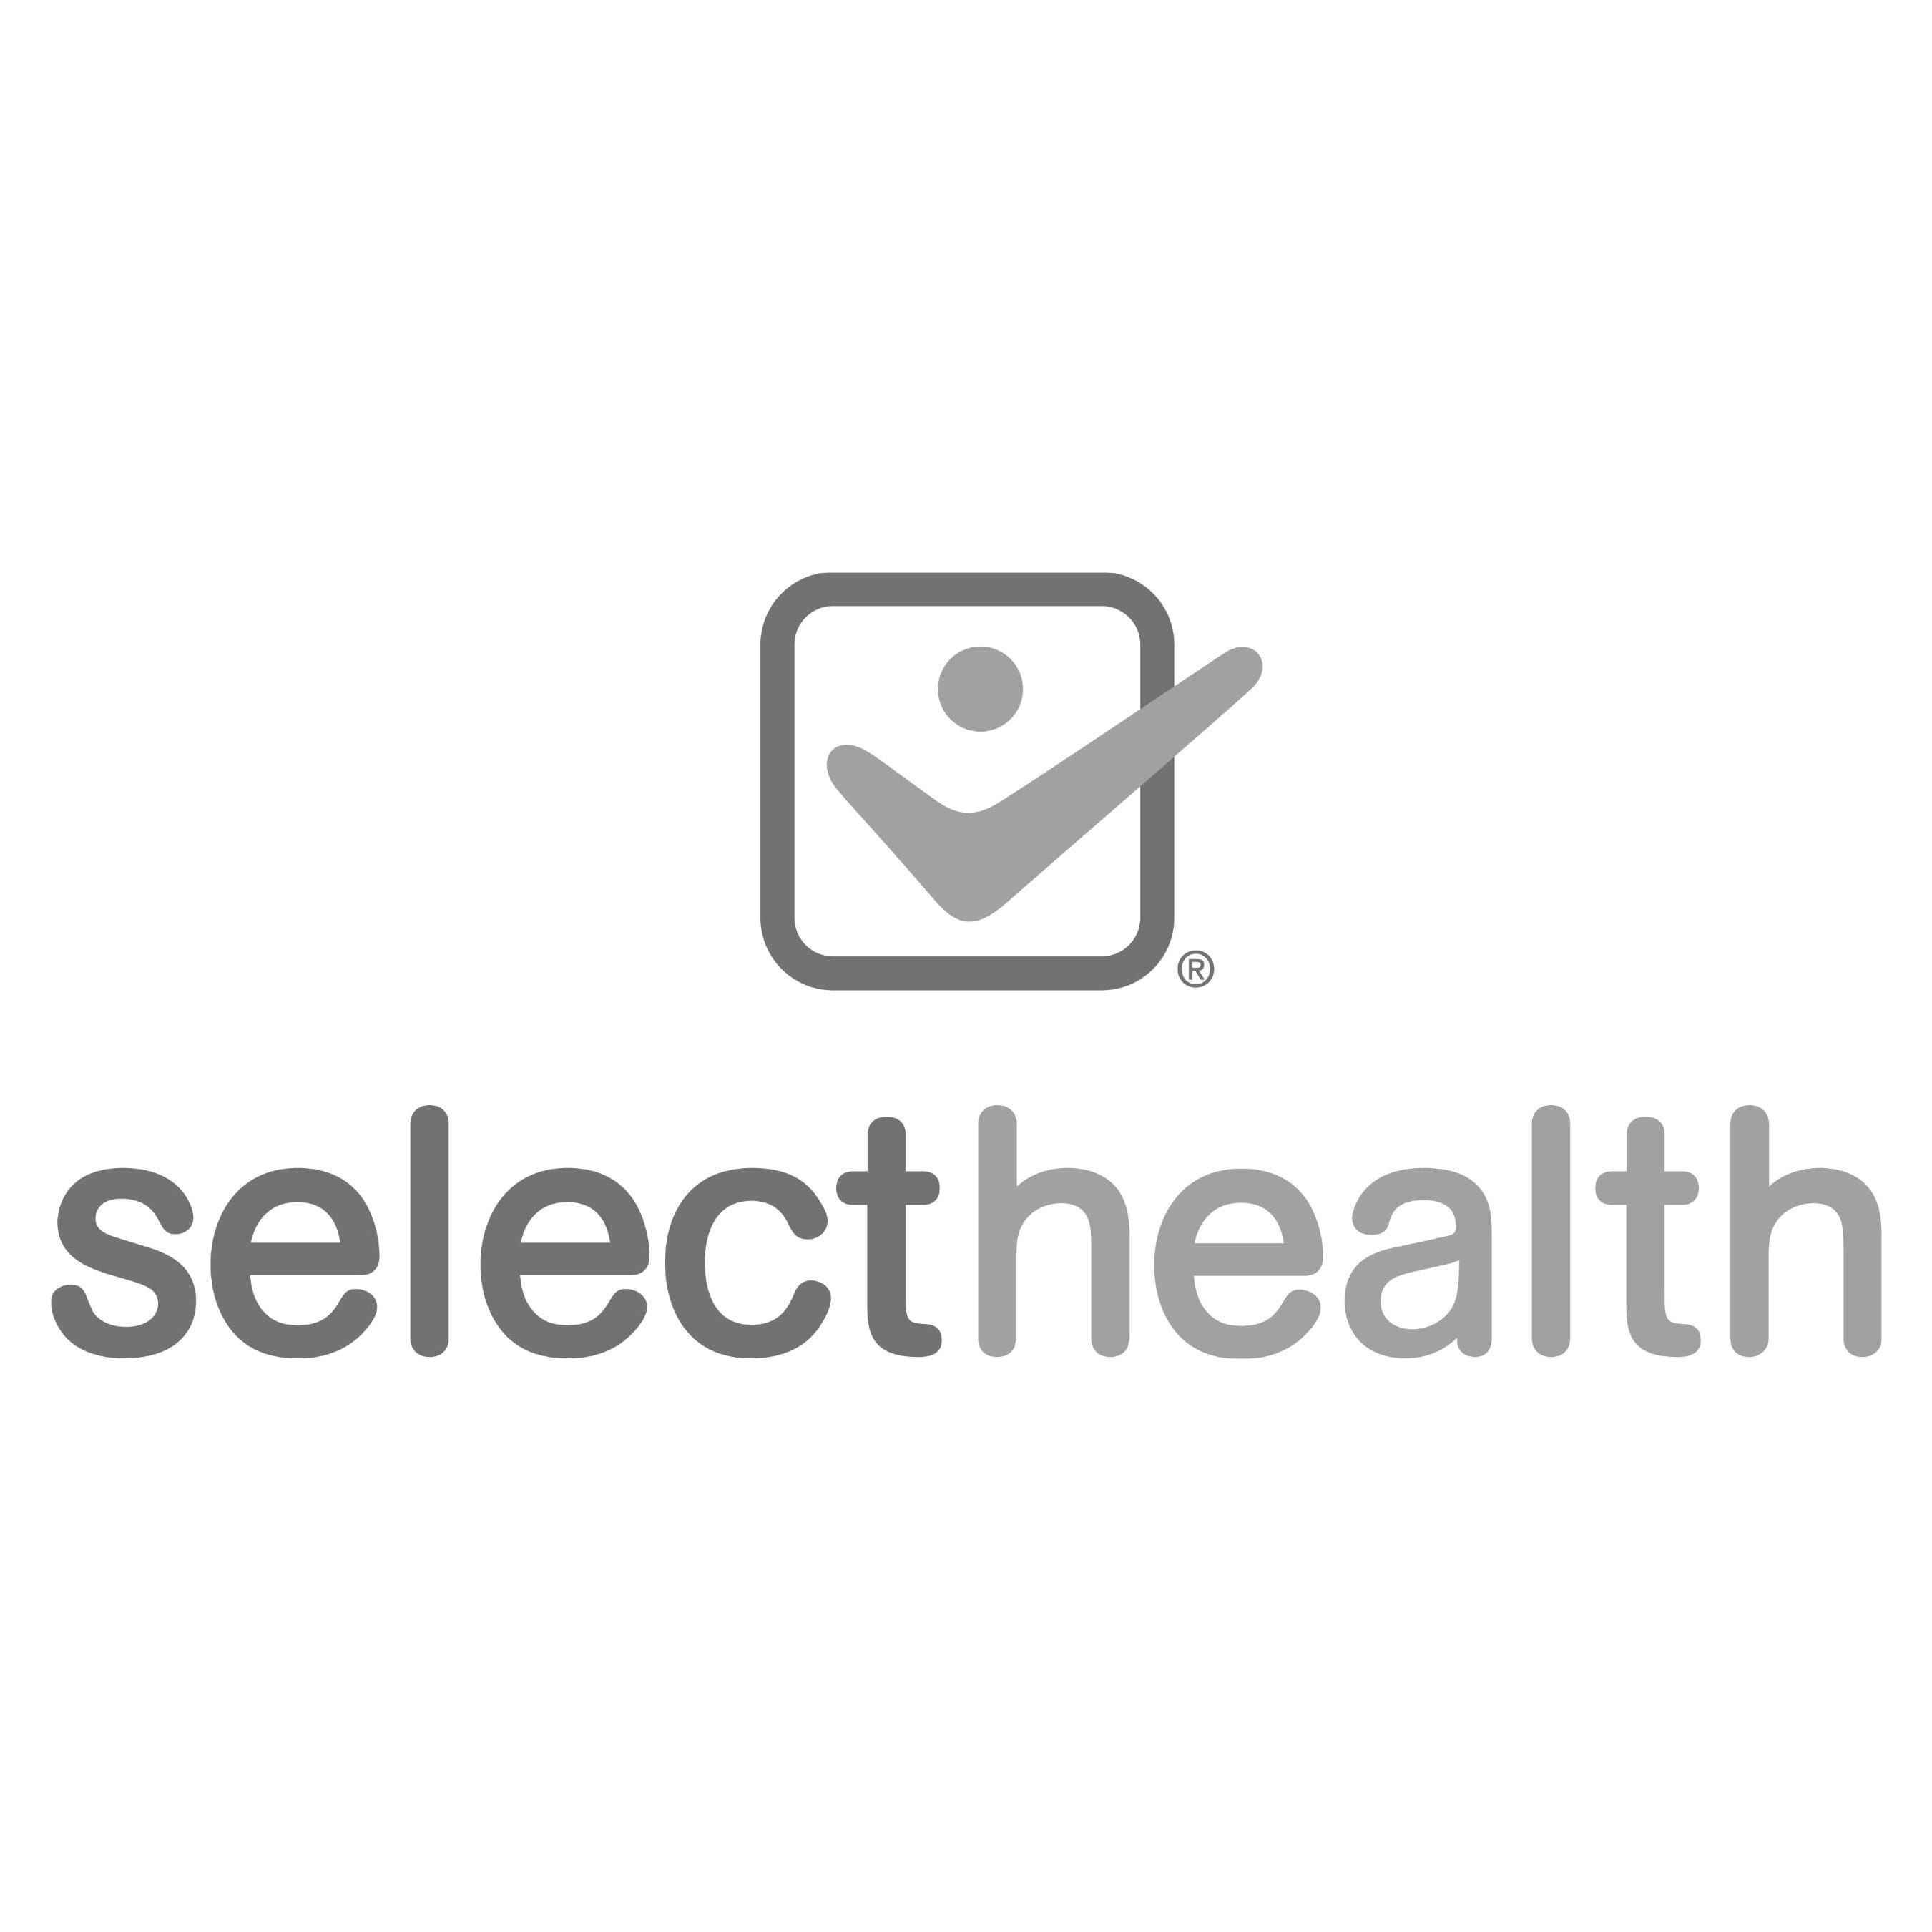 selecthealth_logo_grey_1x1